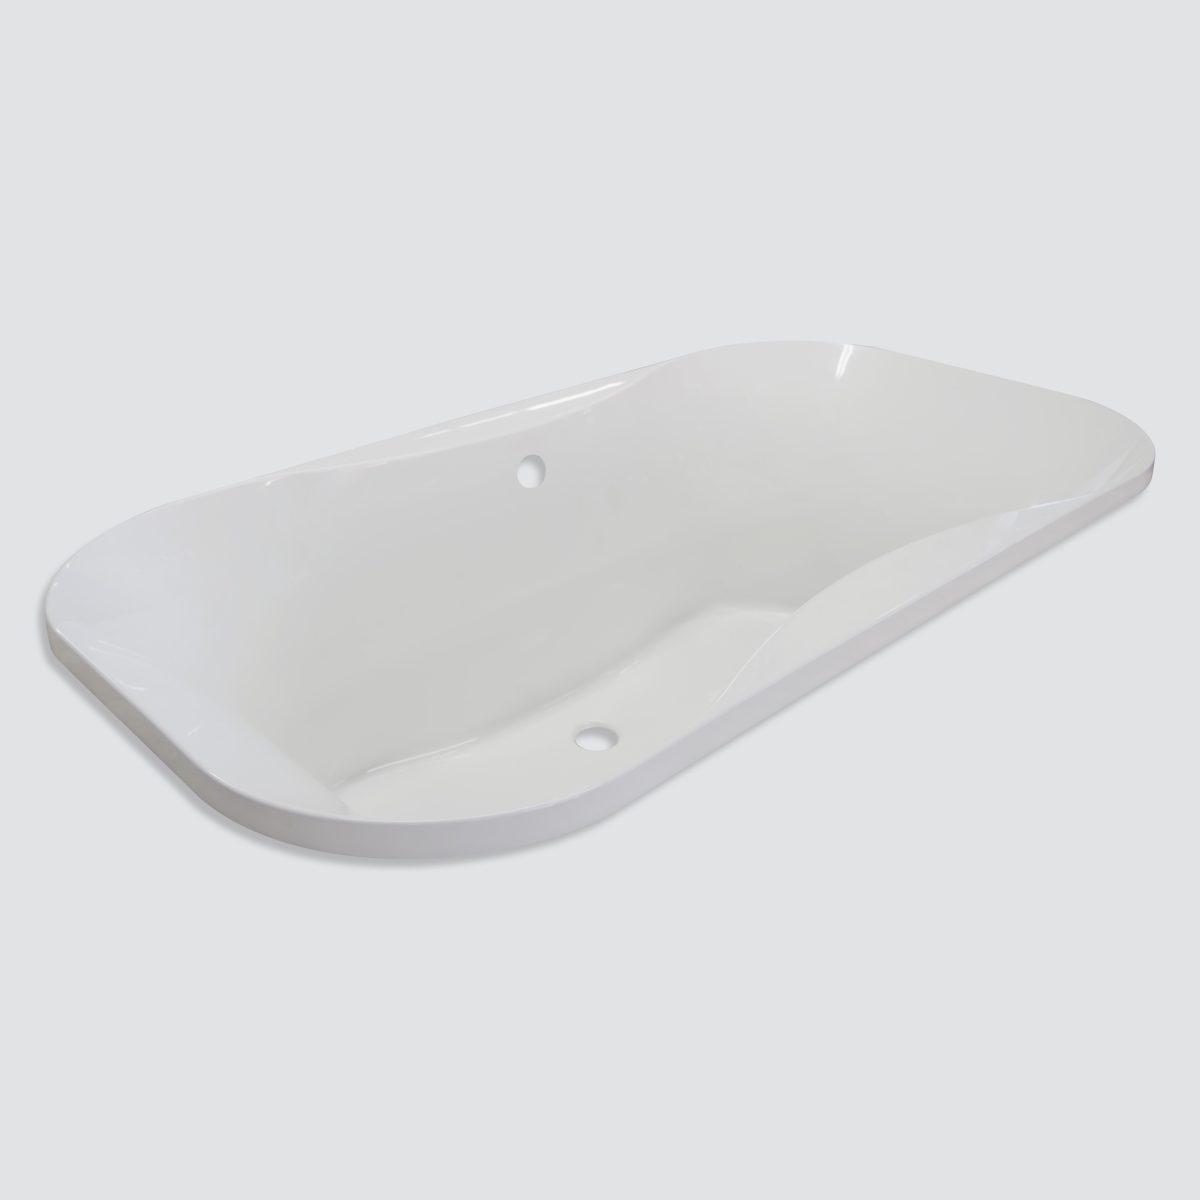 Bordeaux6636diwht 66 X 36 In. Contemporary Acrylic Contoured Drop In Bath Tub, White